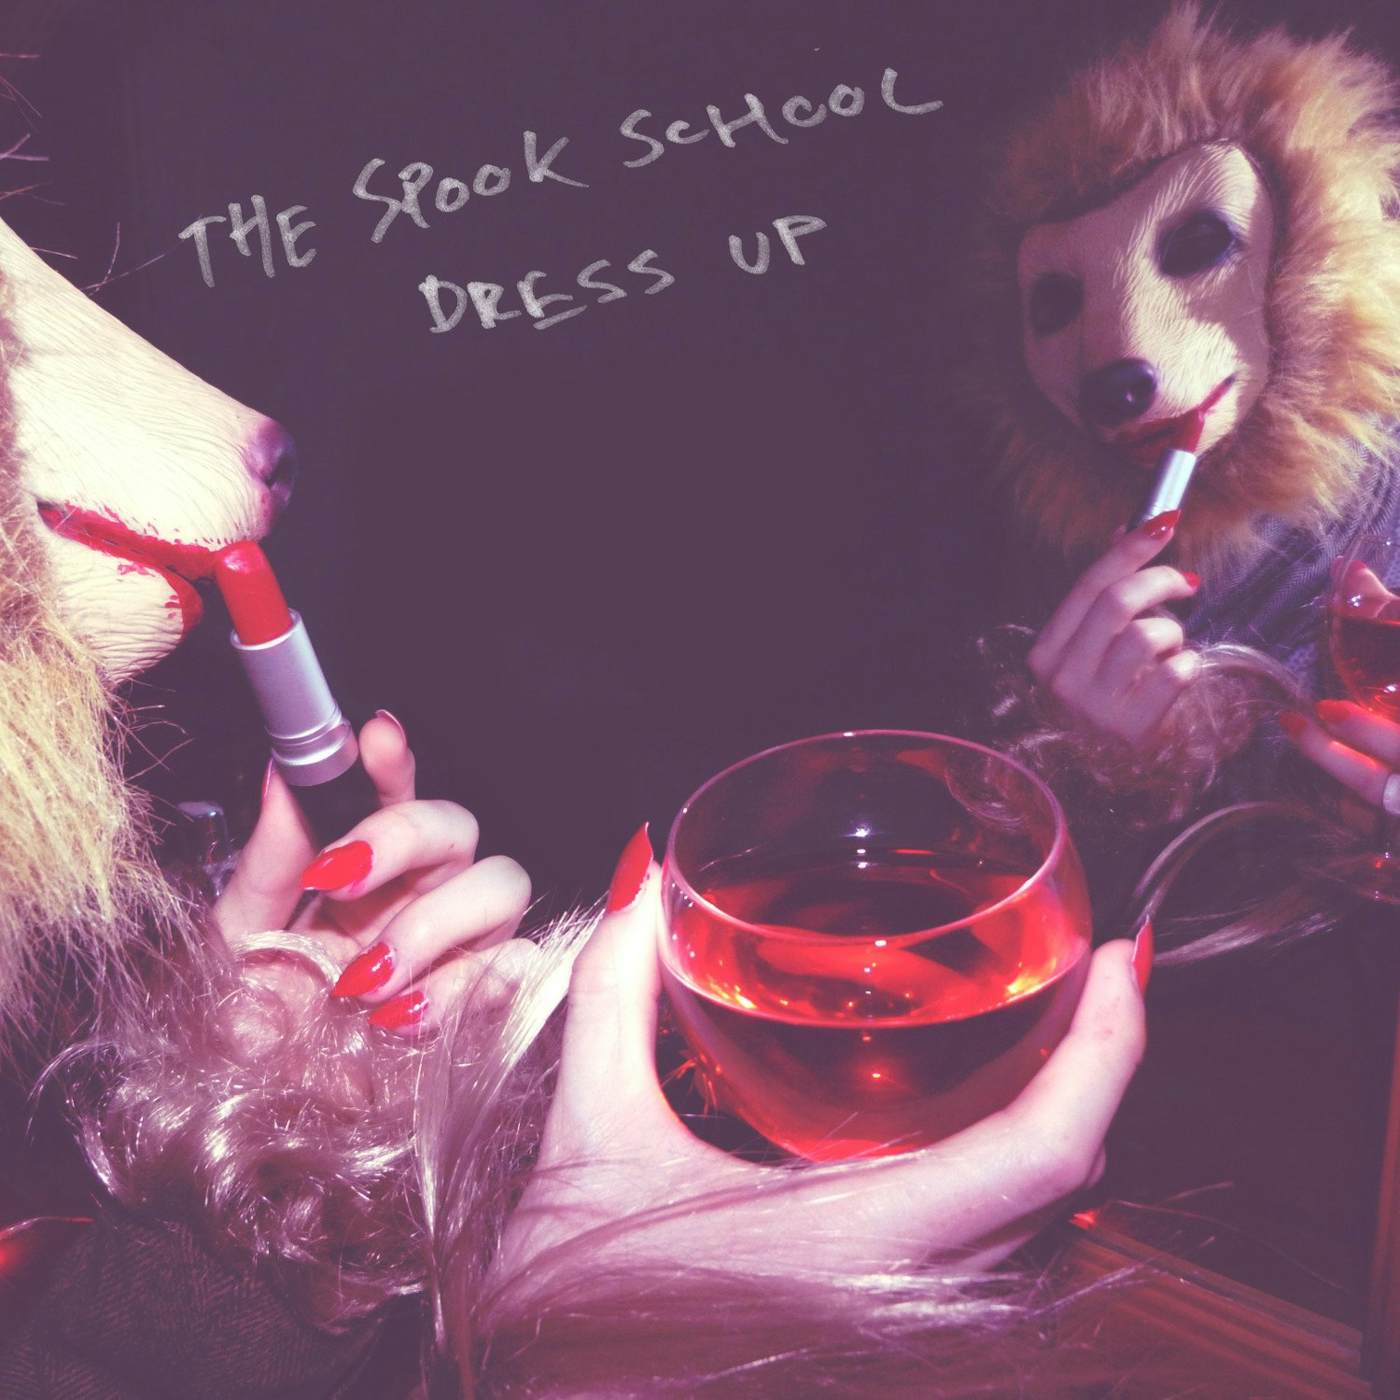 The Spook School 'Dress Up' Vinyl Record